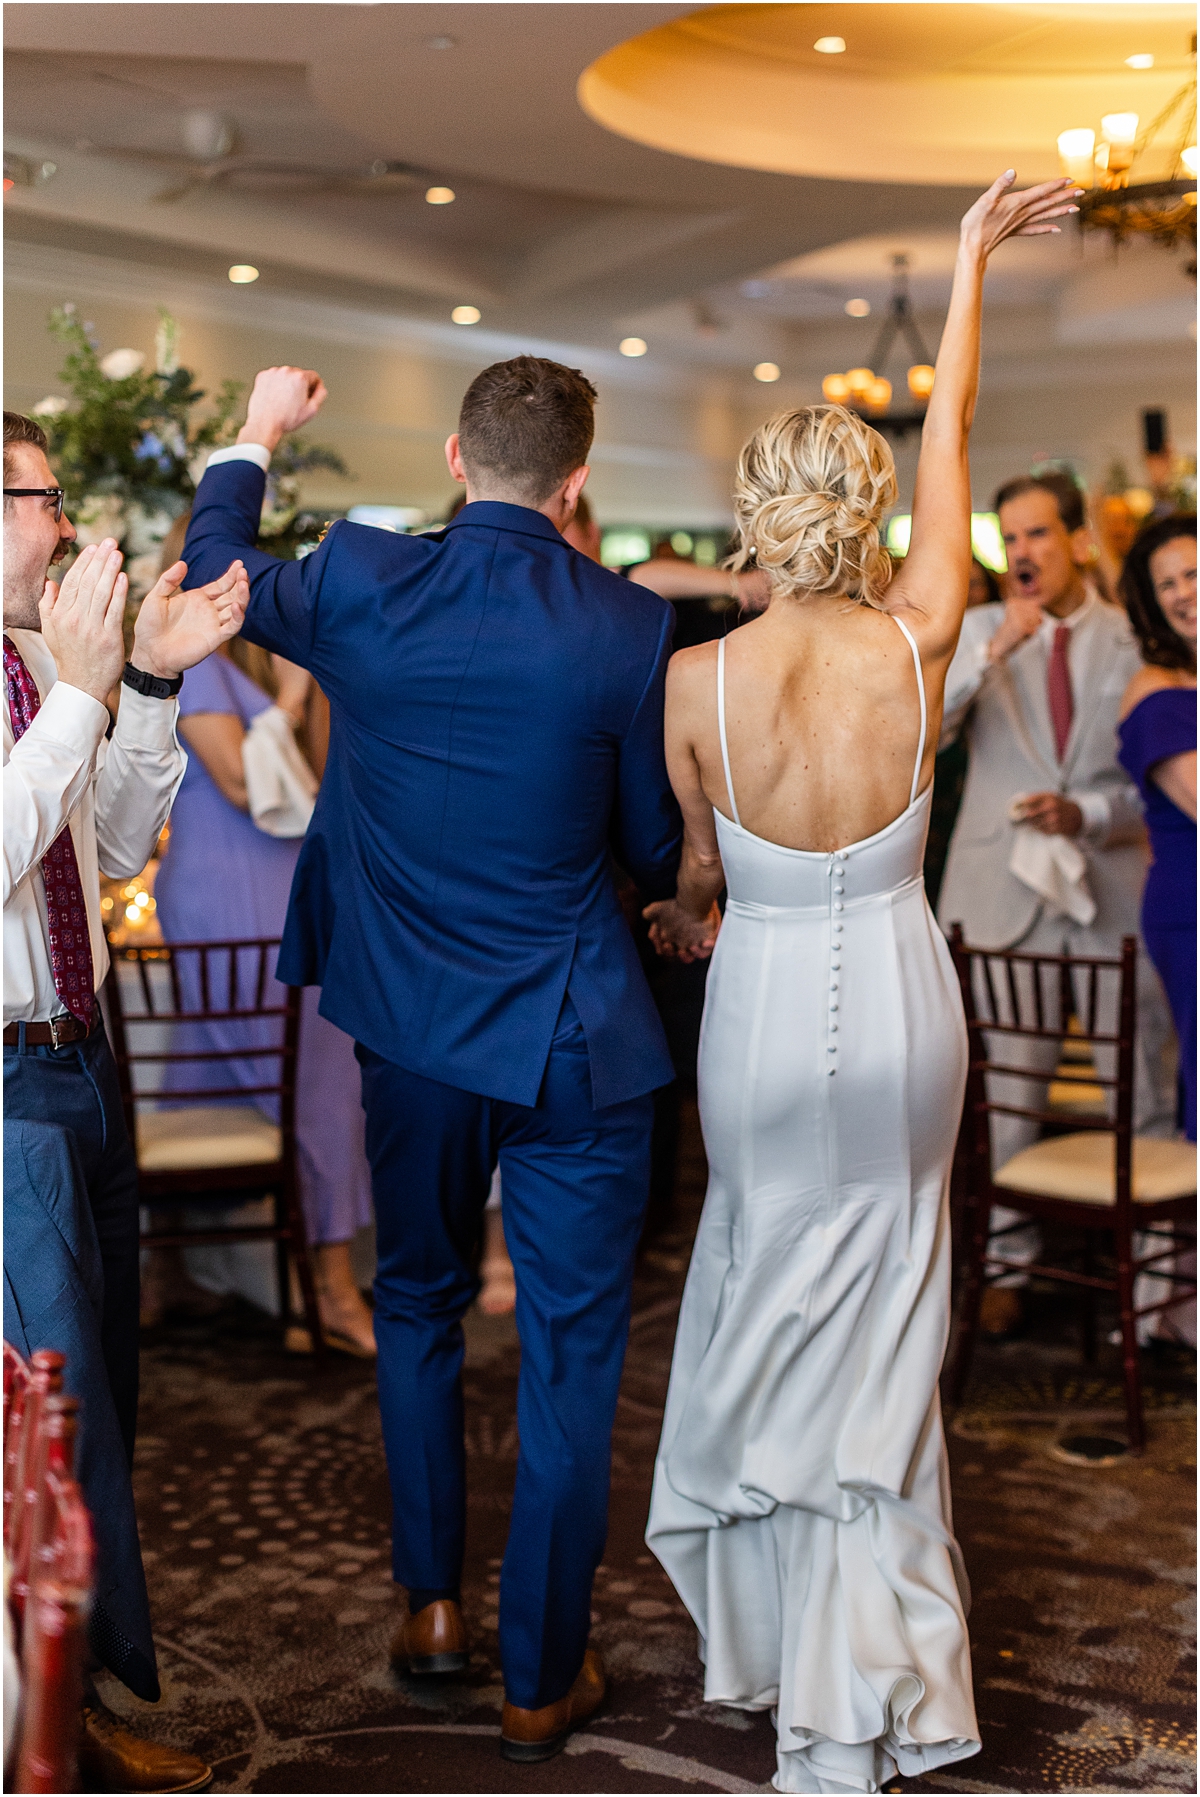 newlyweds make grand entrance into wedding reception